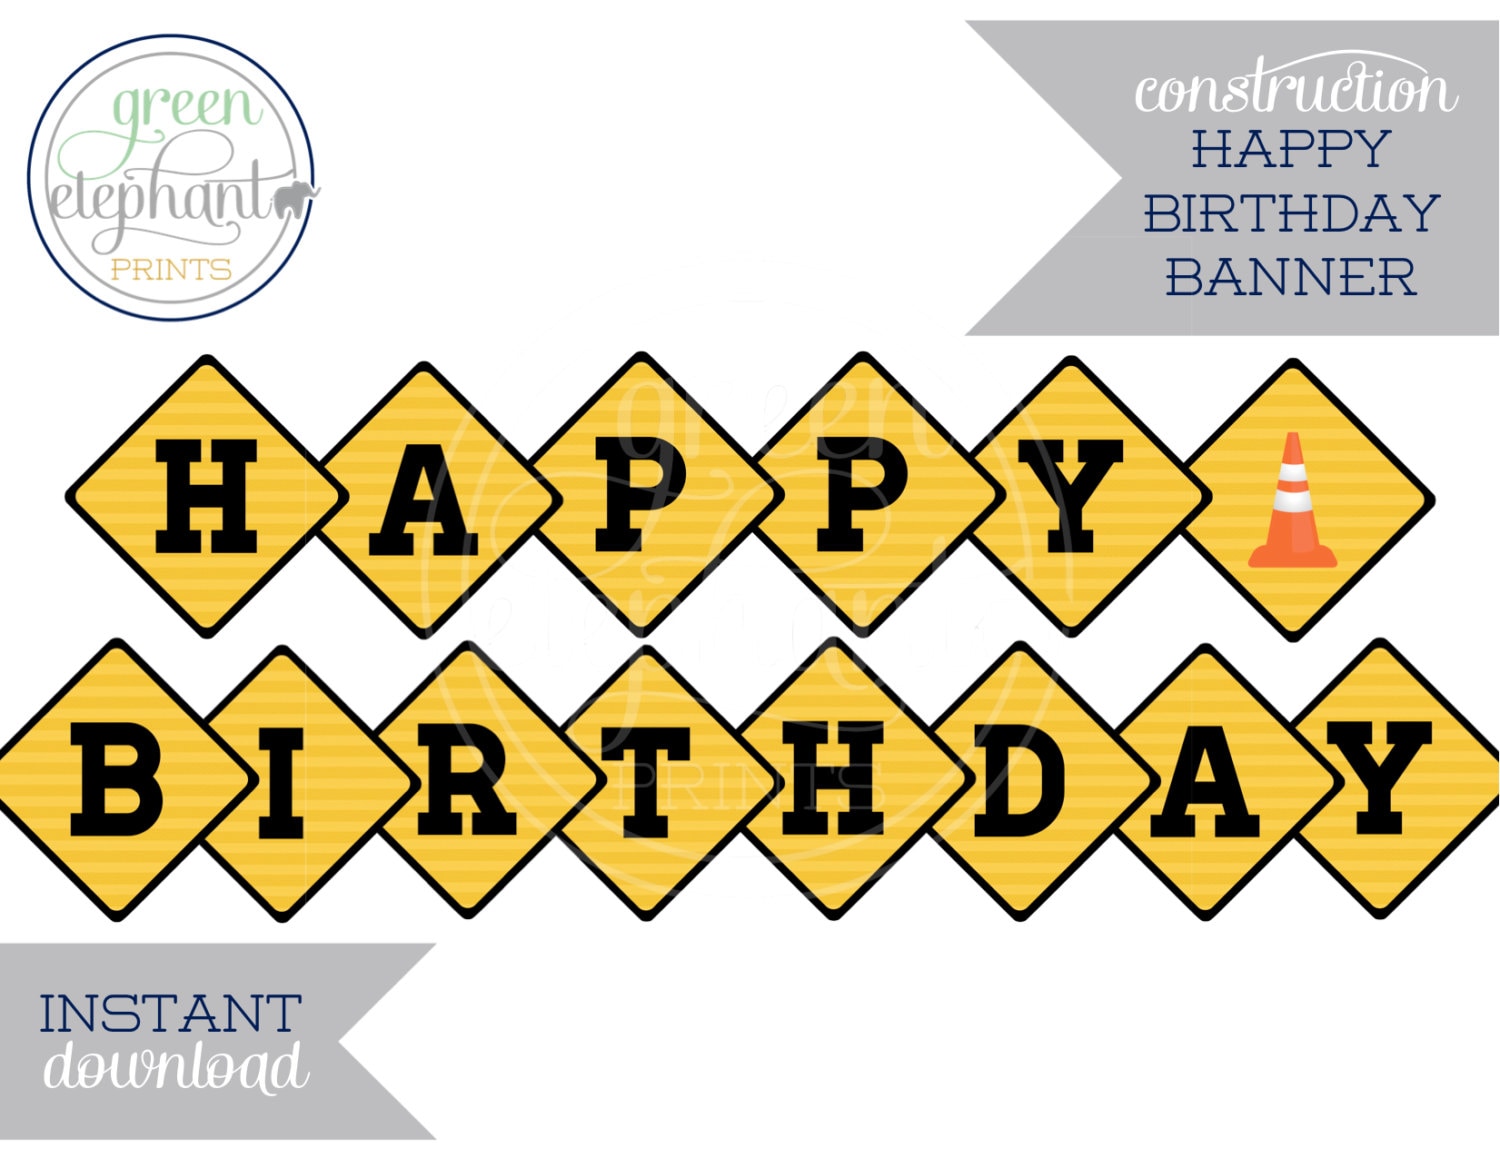 Happy Birthday Construction Birthday Banner Free Printable